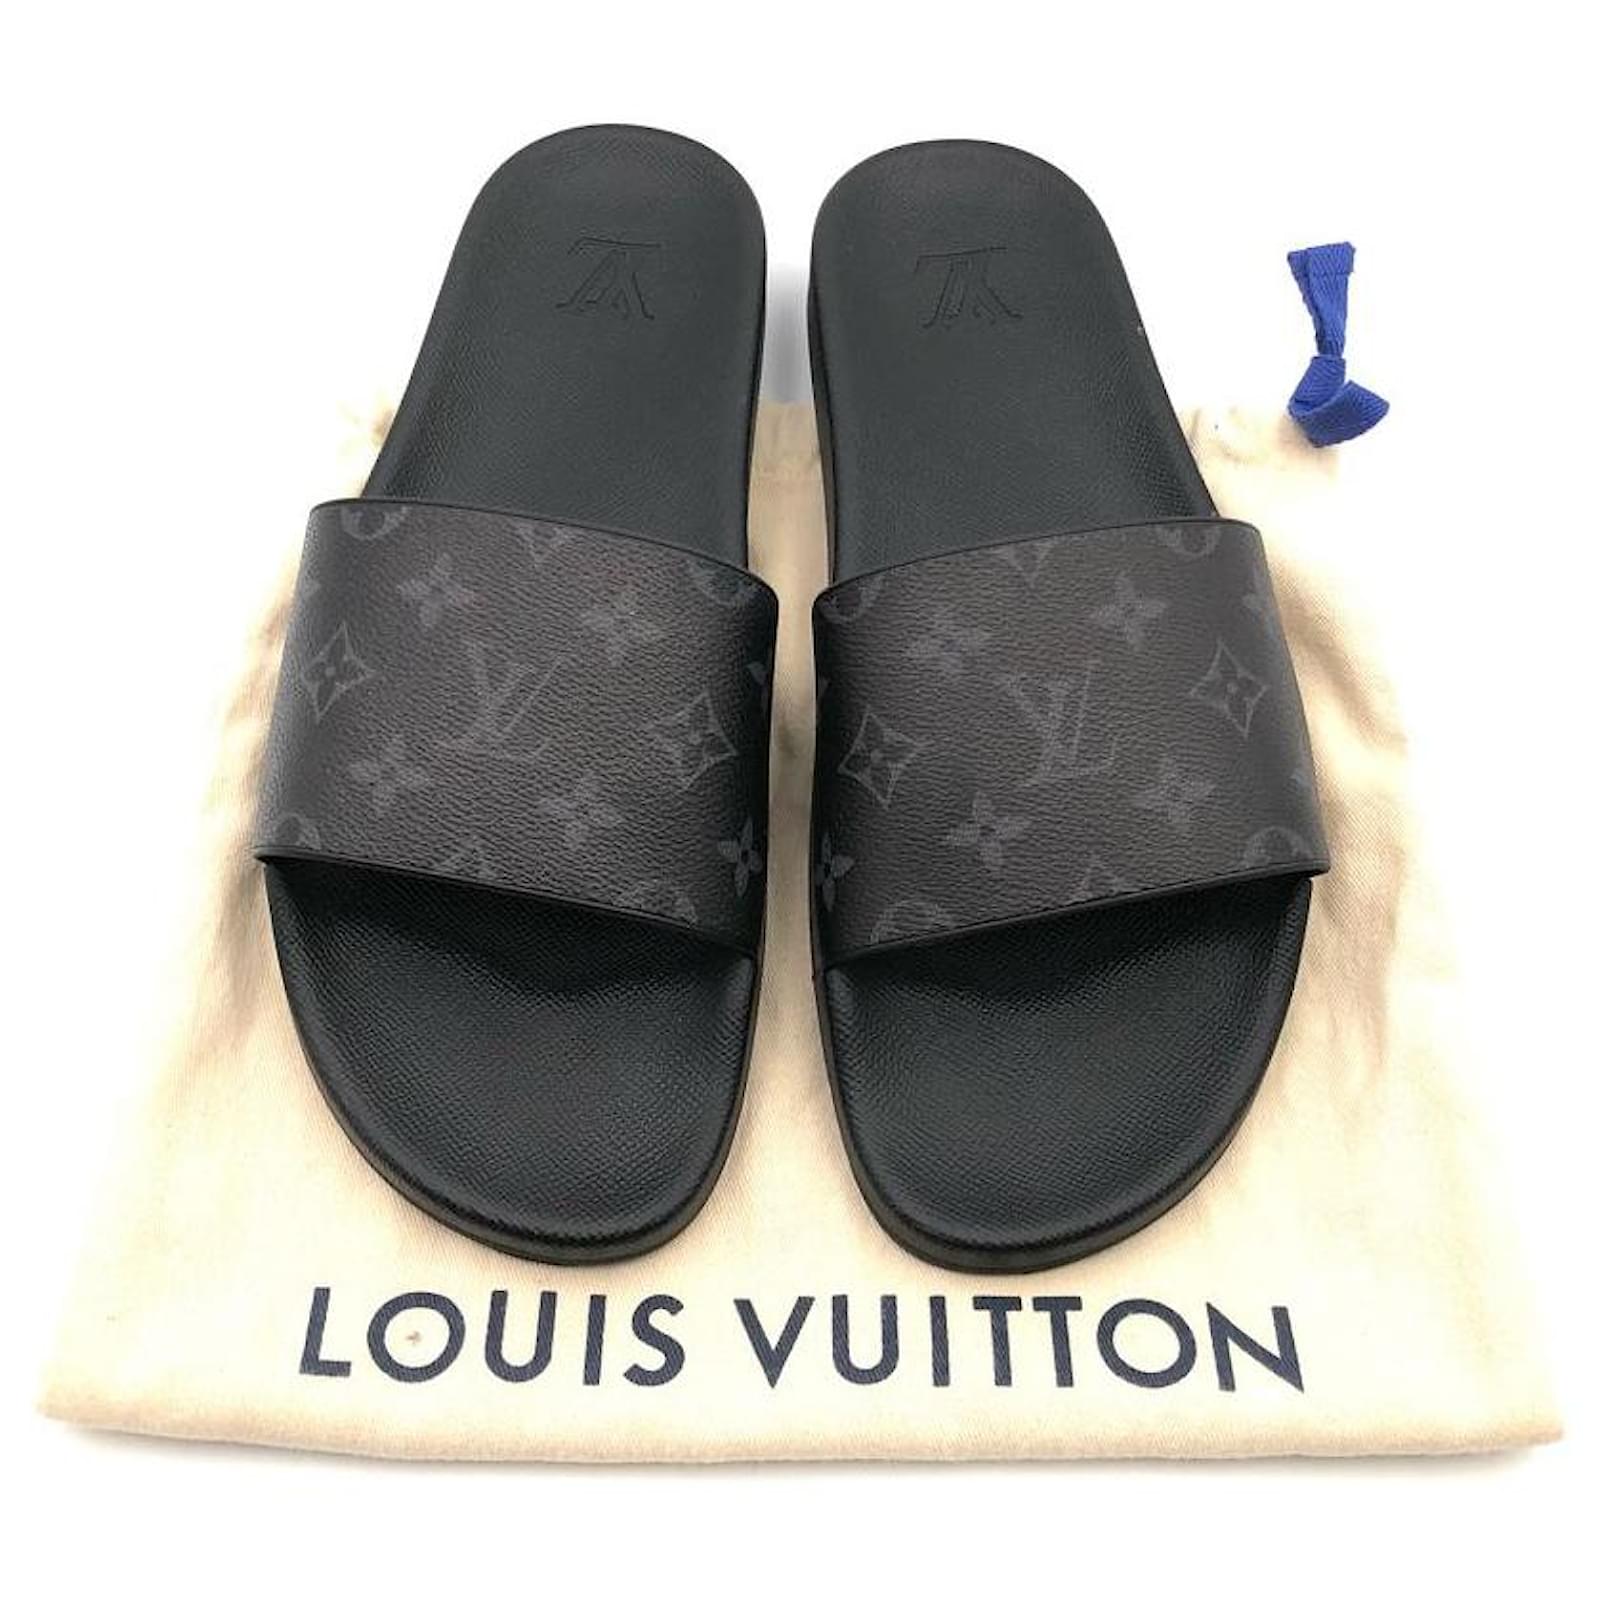 Claquettes Louis Vuitton Homme Clearance, SAVE 56% 